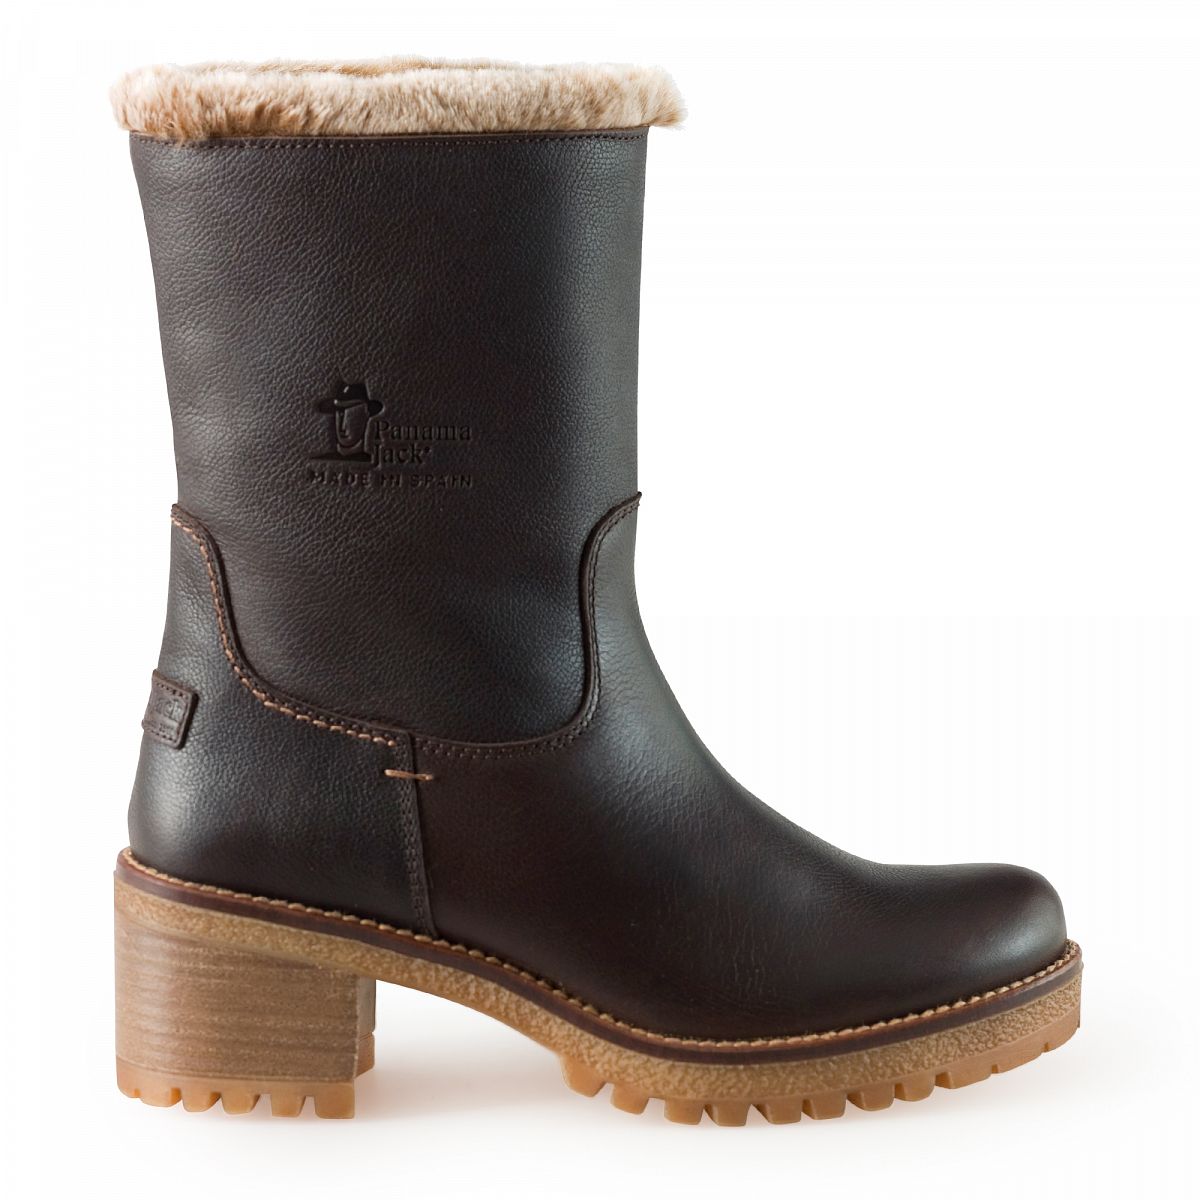 Women’s boot PIOLA brown | PANAMA JACK® Official